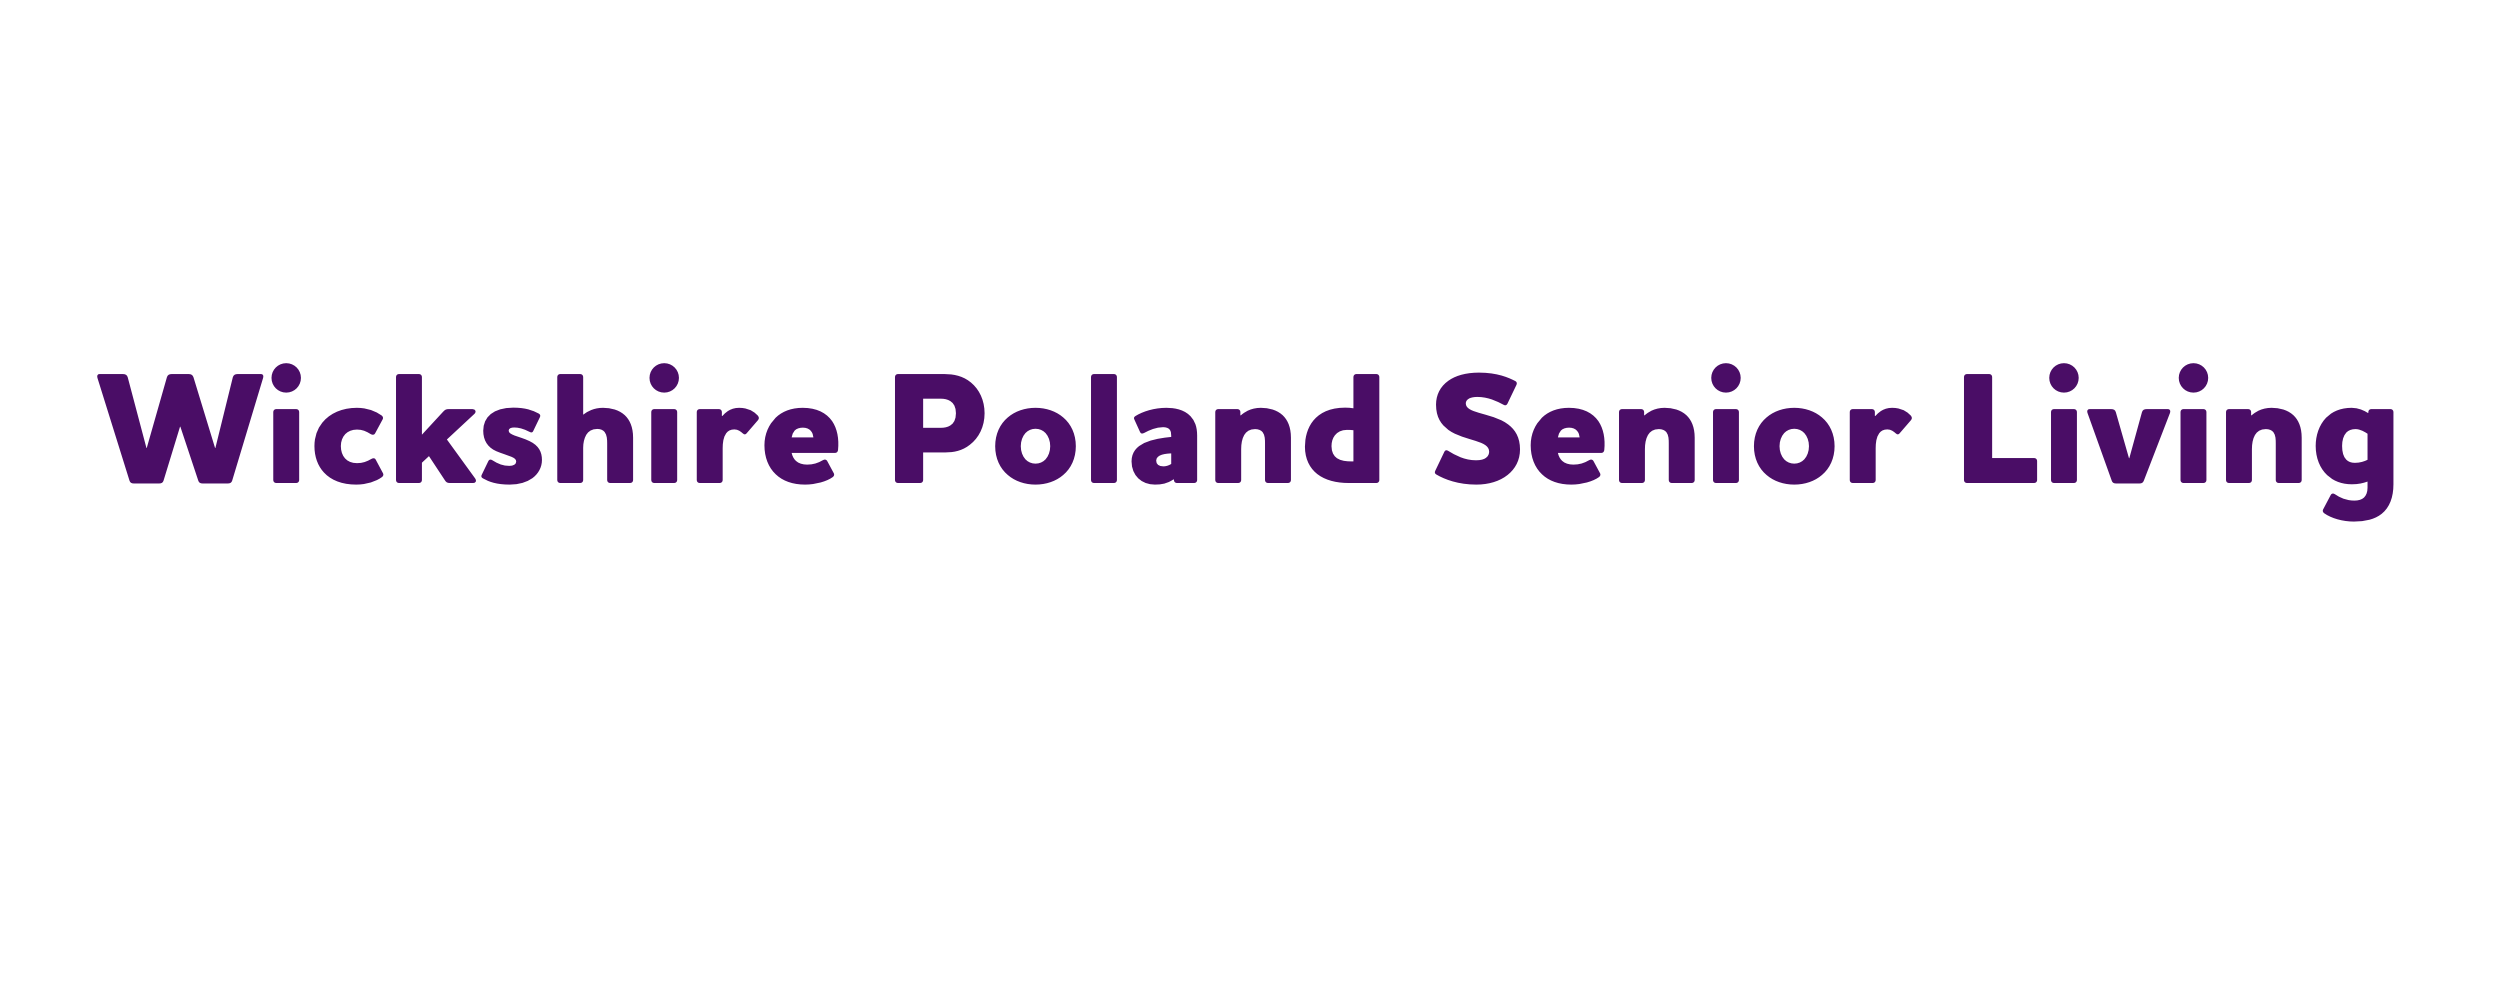 D. Wickshire Polonia Senior Living (Stride)